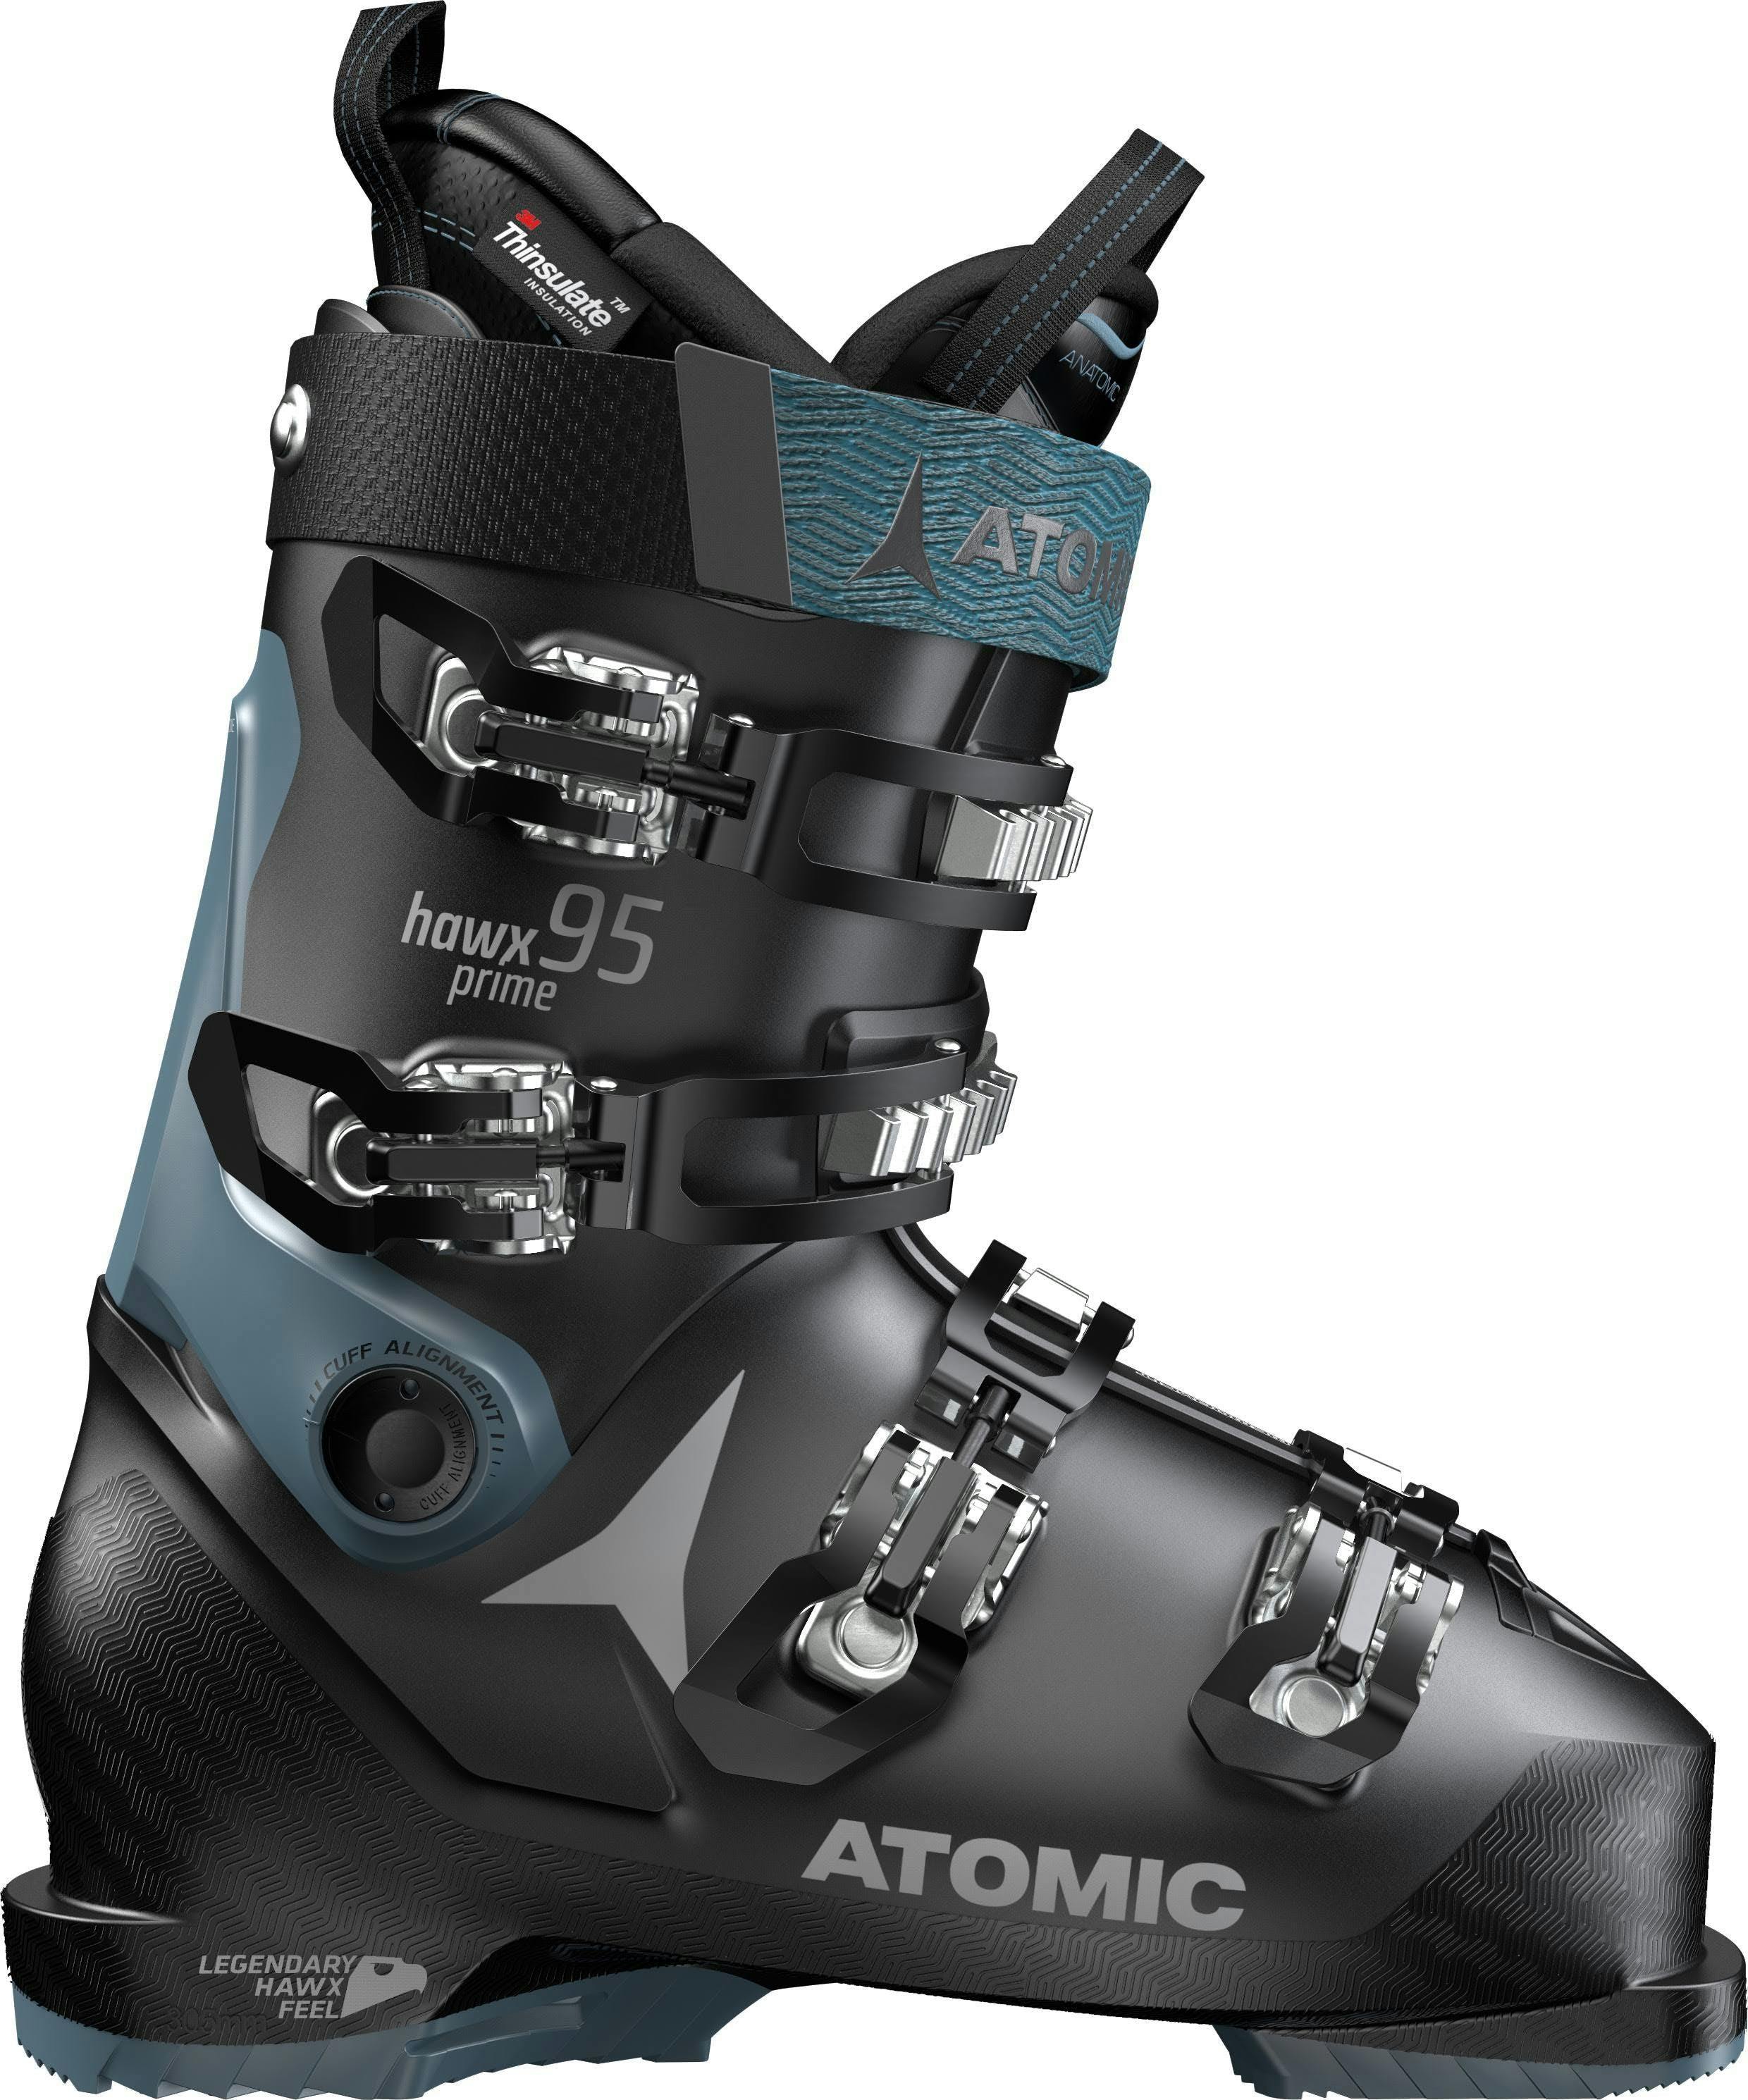 Atomic Hawx Prime 95 Ski Boots Women's · 2020